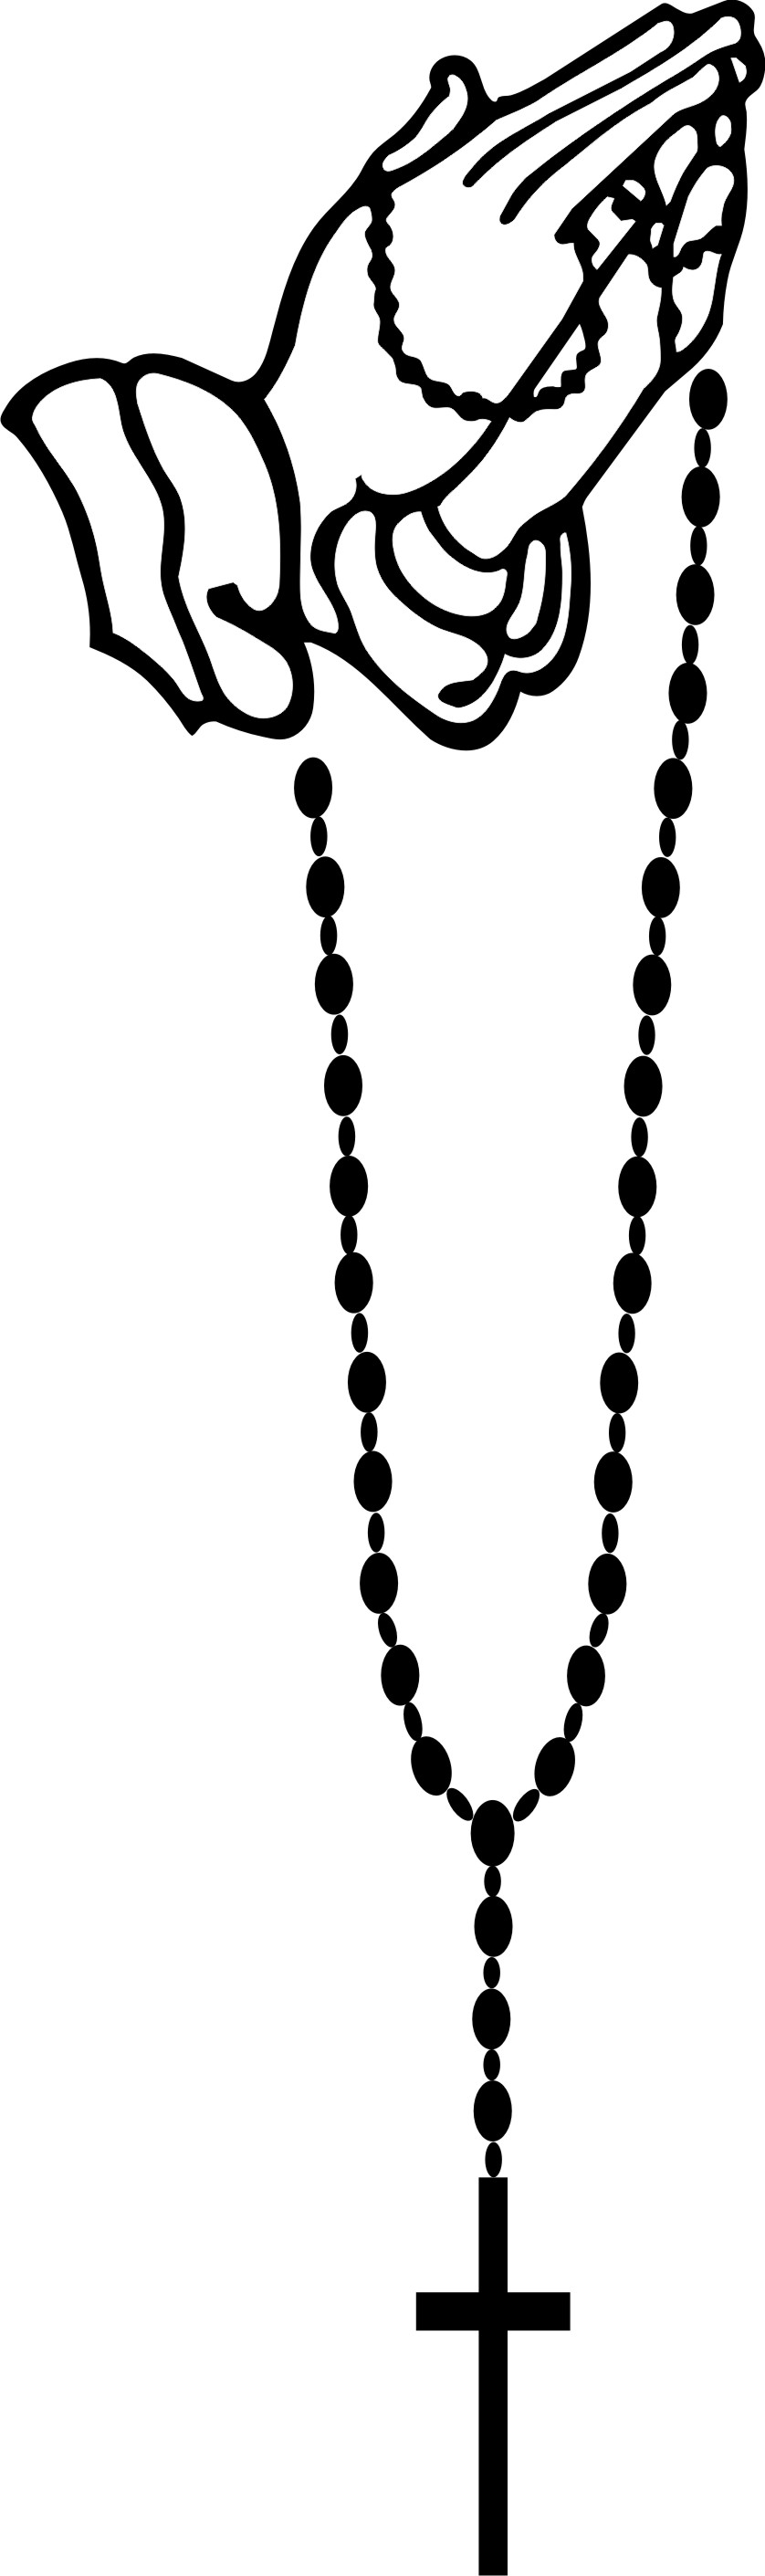 Rosary clipart images - Clipa - Rosary Clip Art